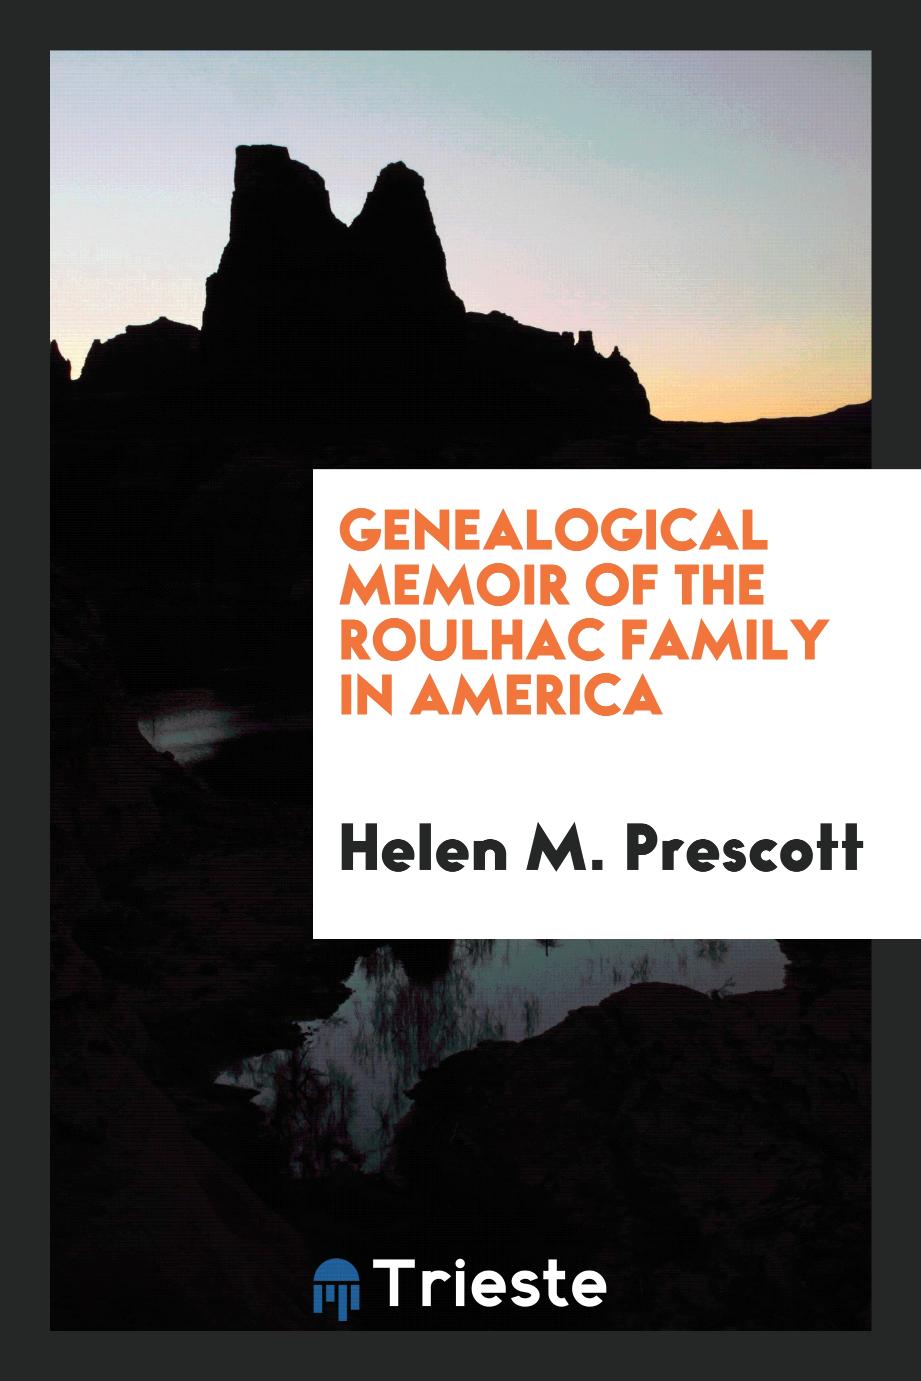 Genealogical memoir of the Roulhac family in America